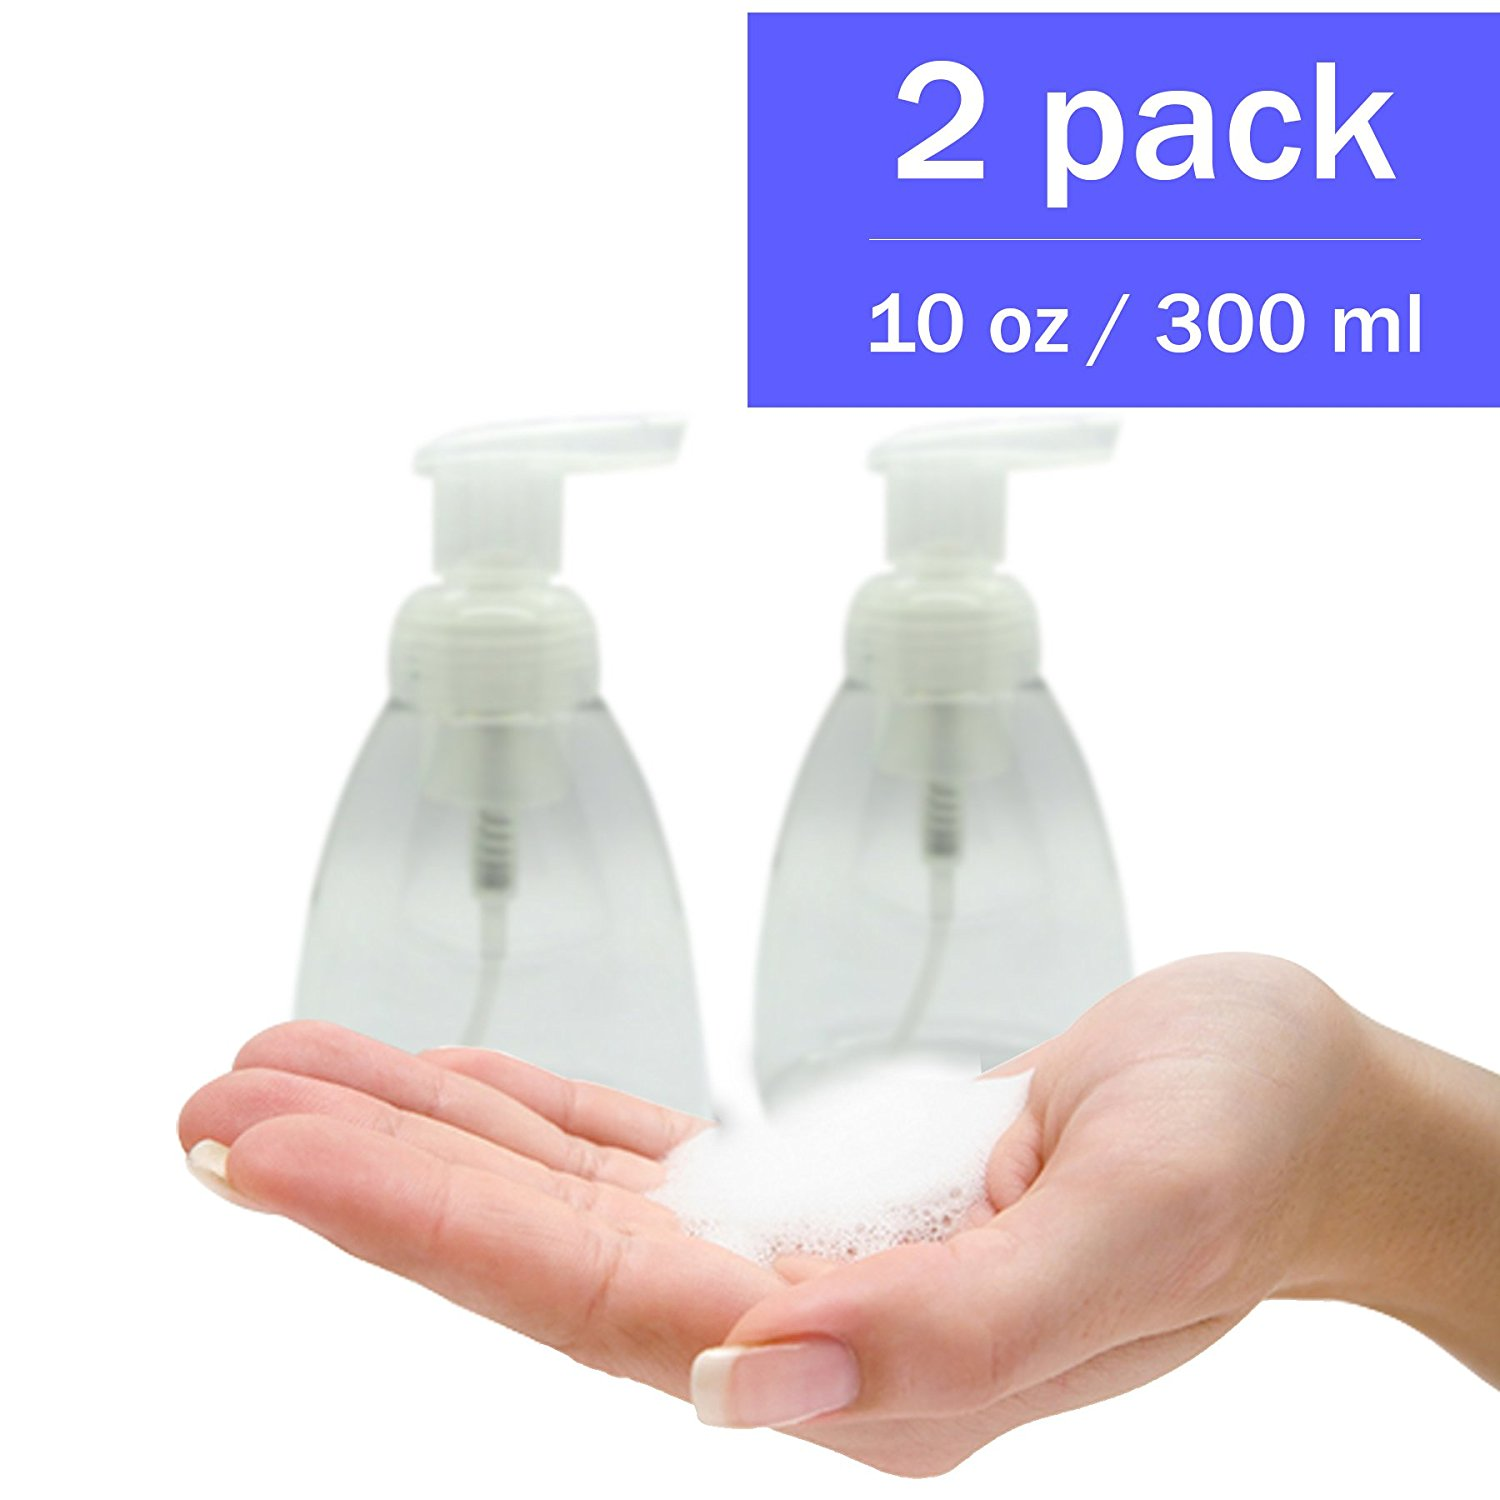 Amazon Lightening Deal: Foaming Soap Dispenser Pump Set of 2 pack Only $7.96! (Reg $25.99)